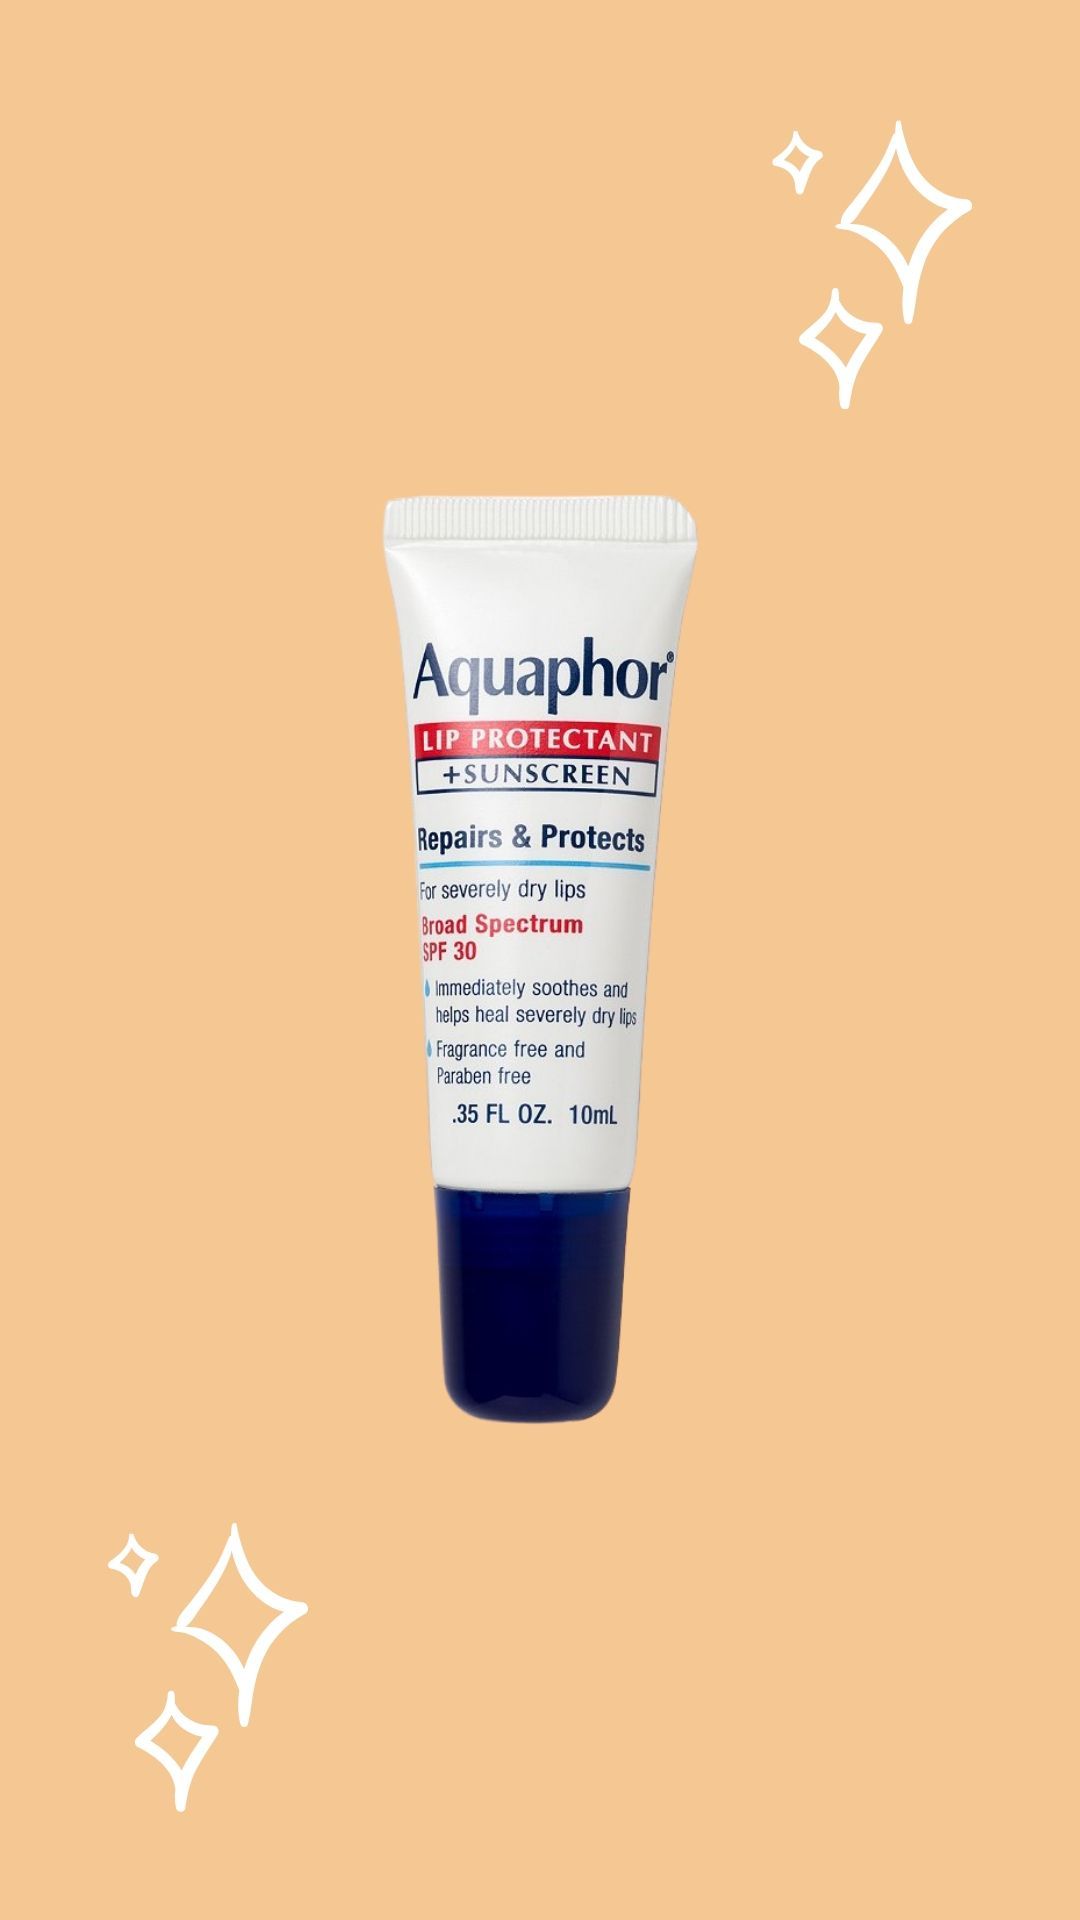 Aquaphor SPF lip balm, orange background with sparkles